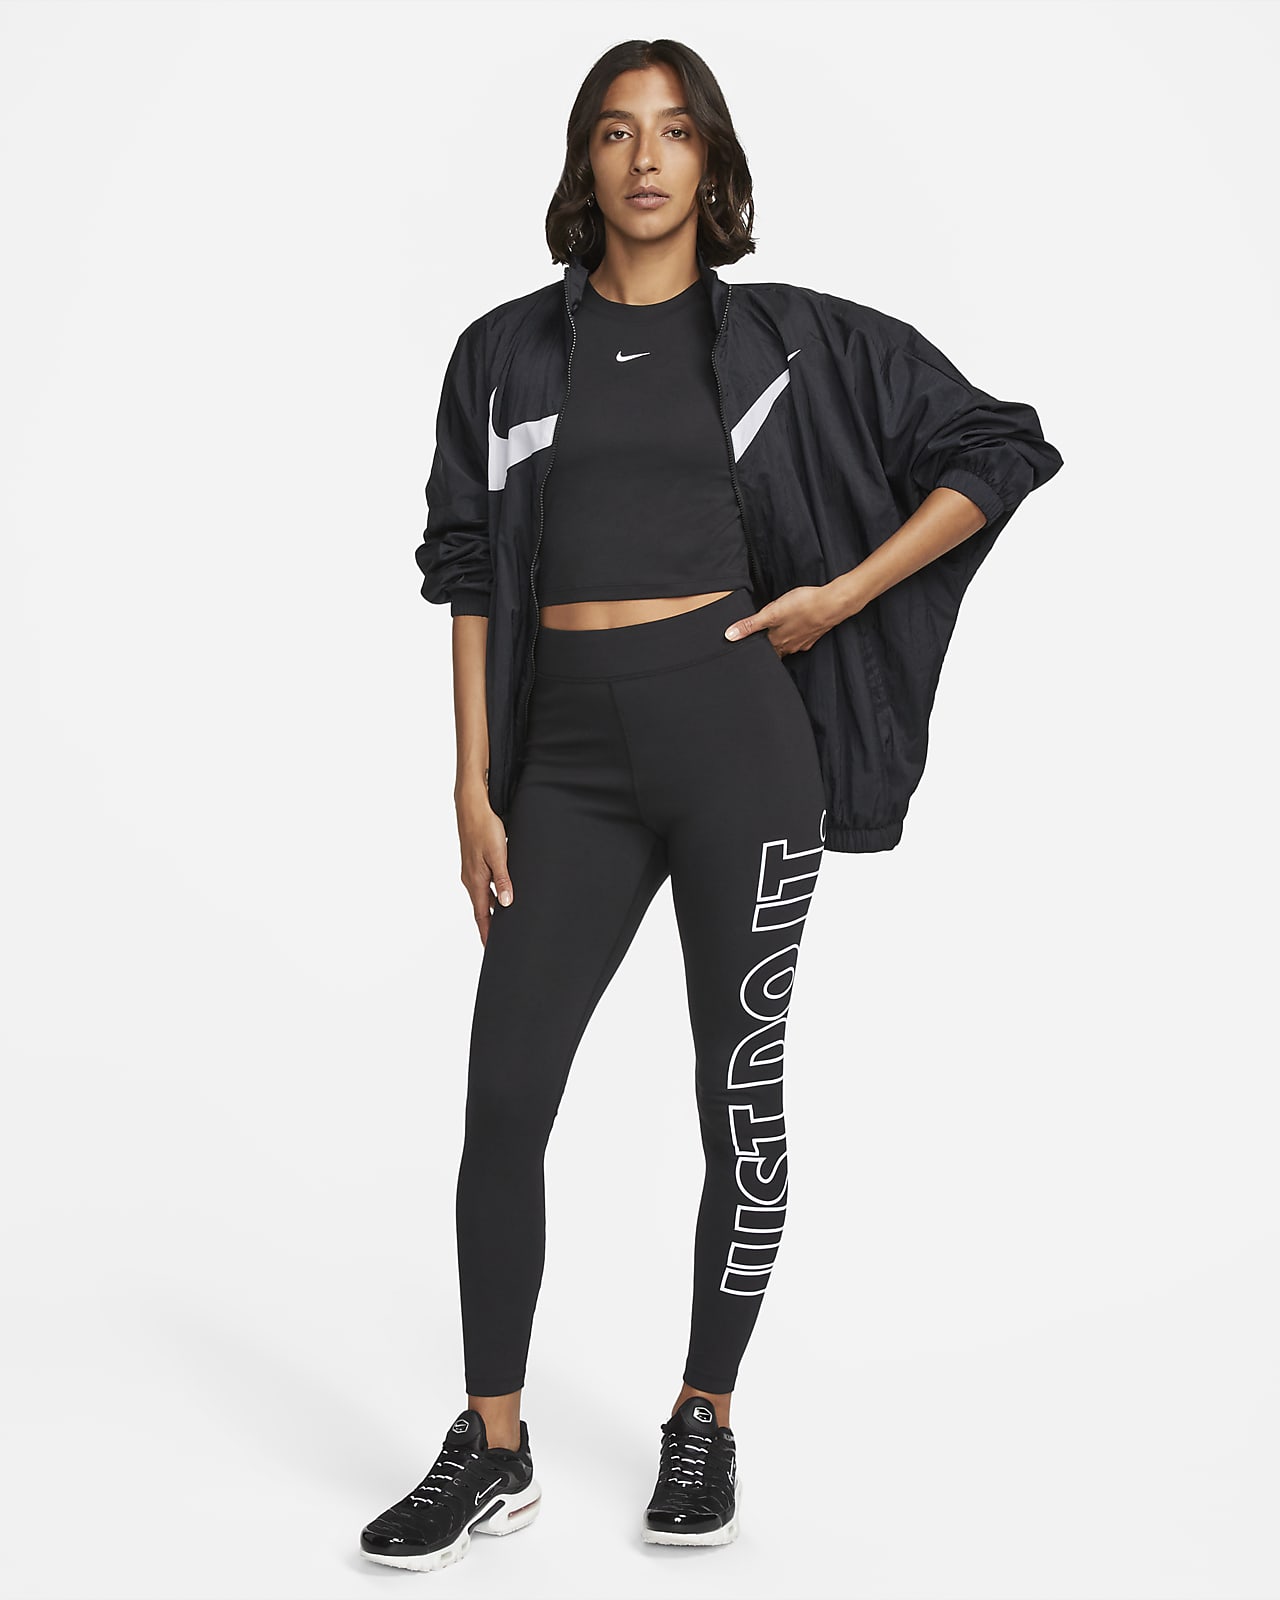 Leggings de cintura subida elástica, com logótipo preto Nike